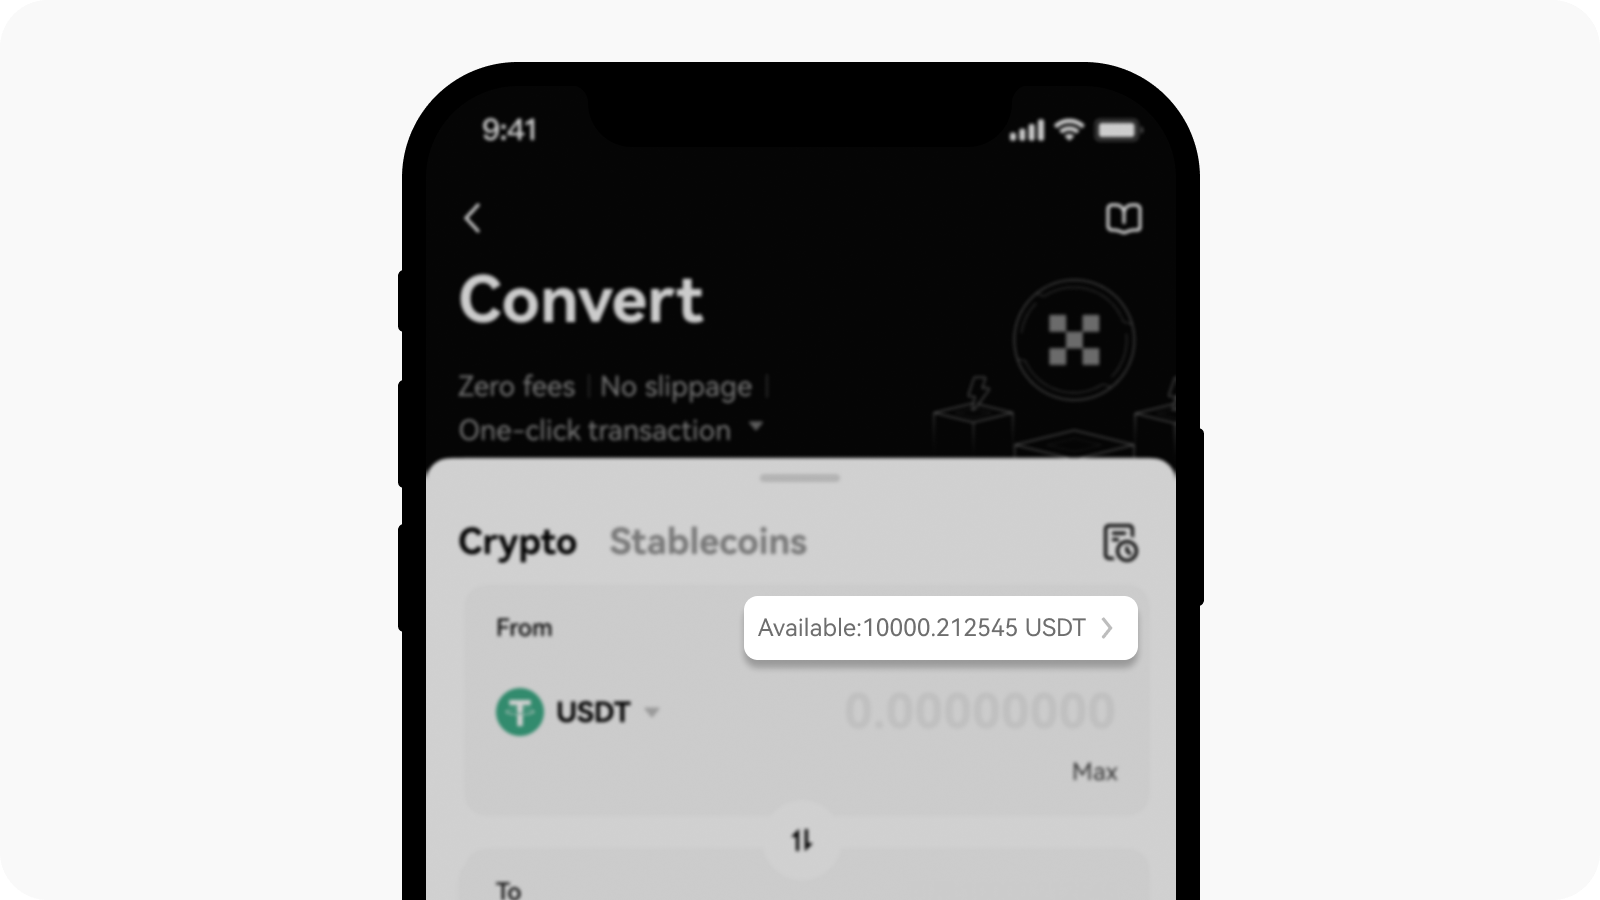 CT-app-deposit crypto to use convert